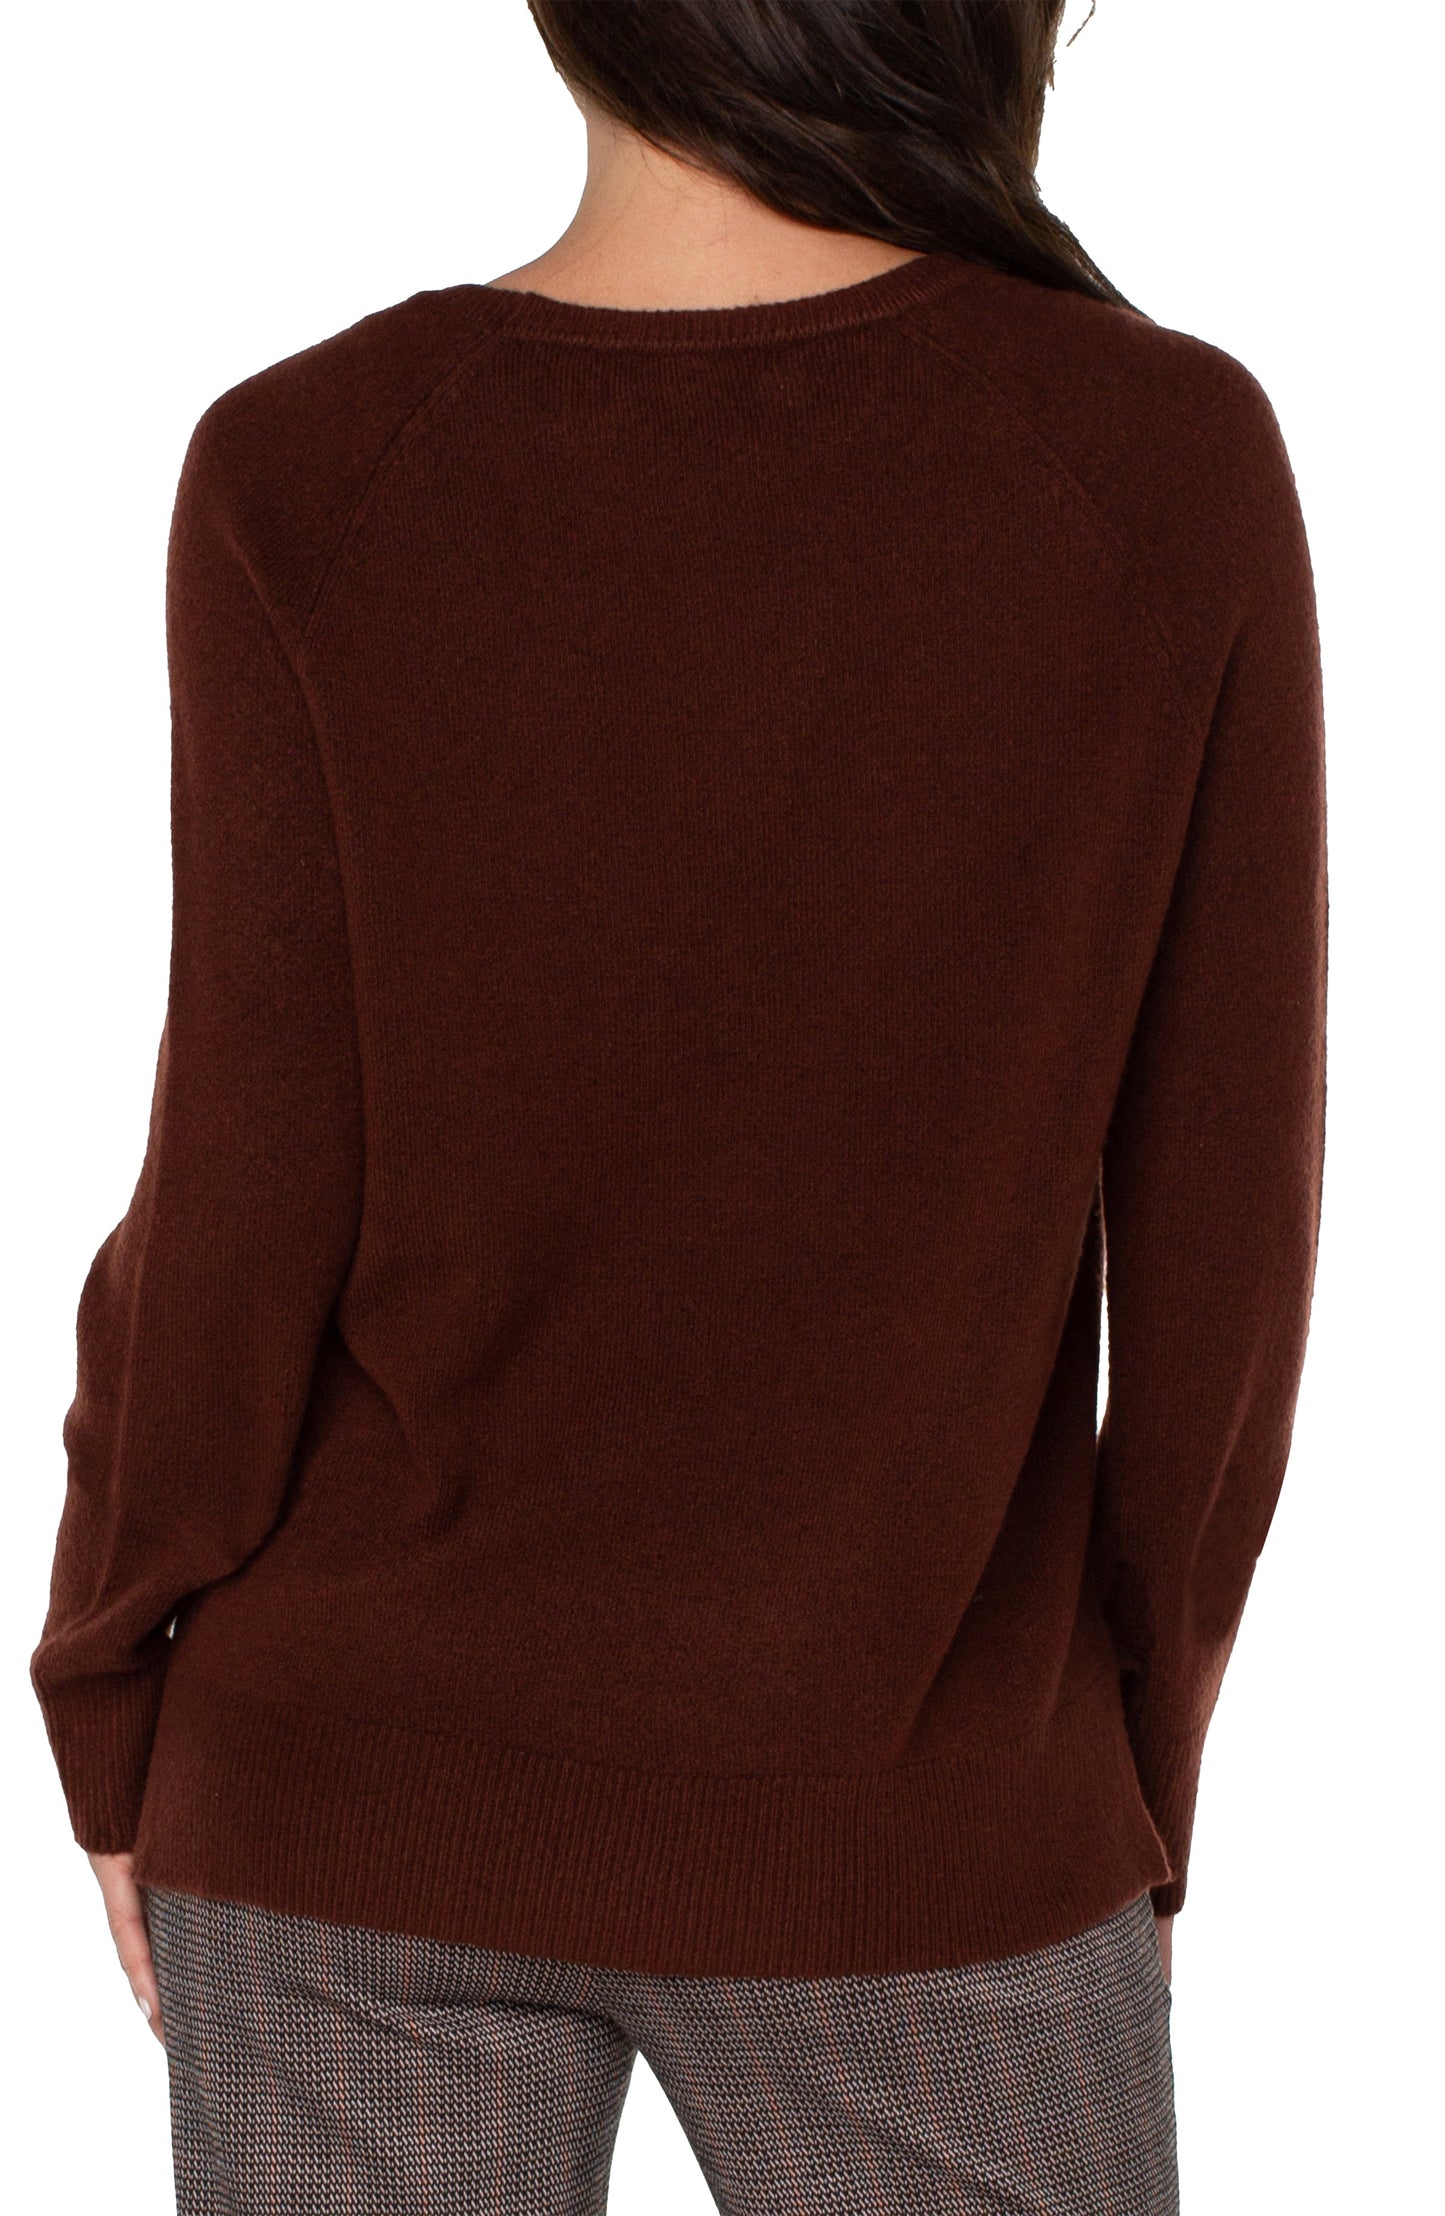 Liverpool Raglan Long Sleeve Sweater (Brunette Heather)